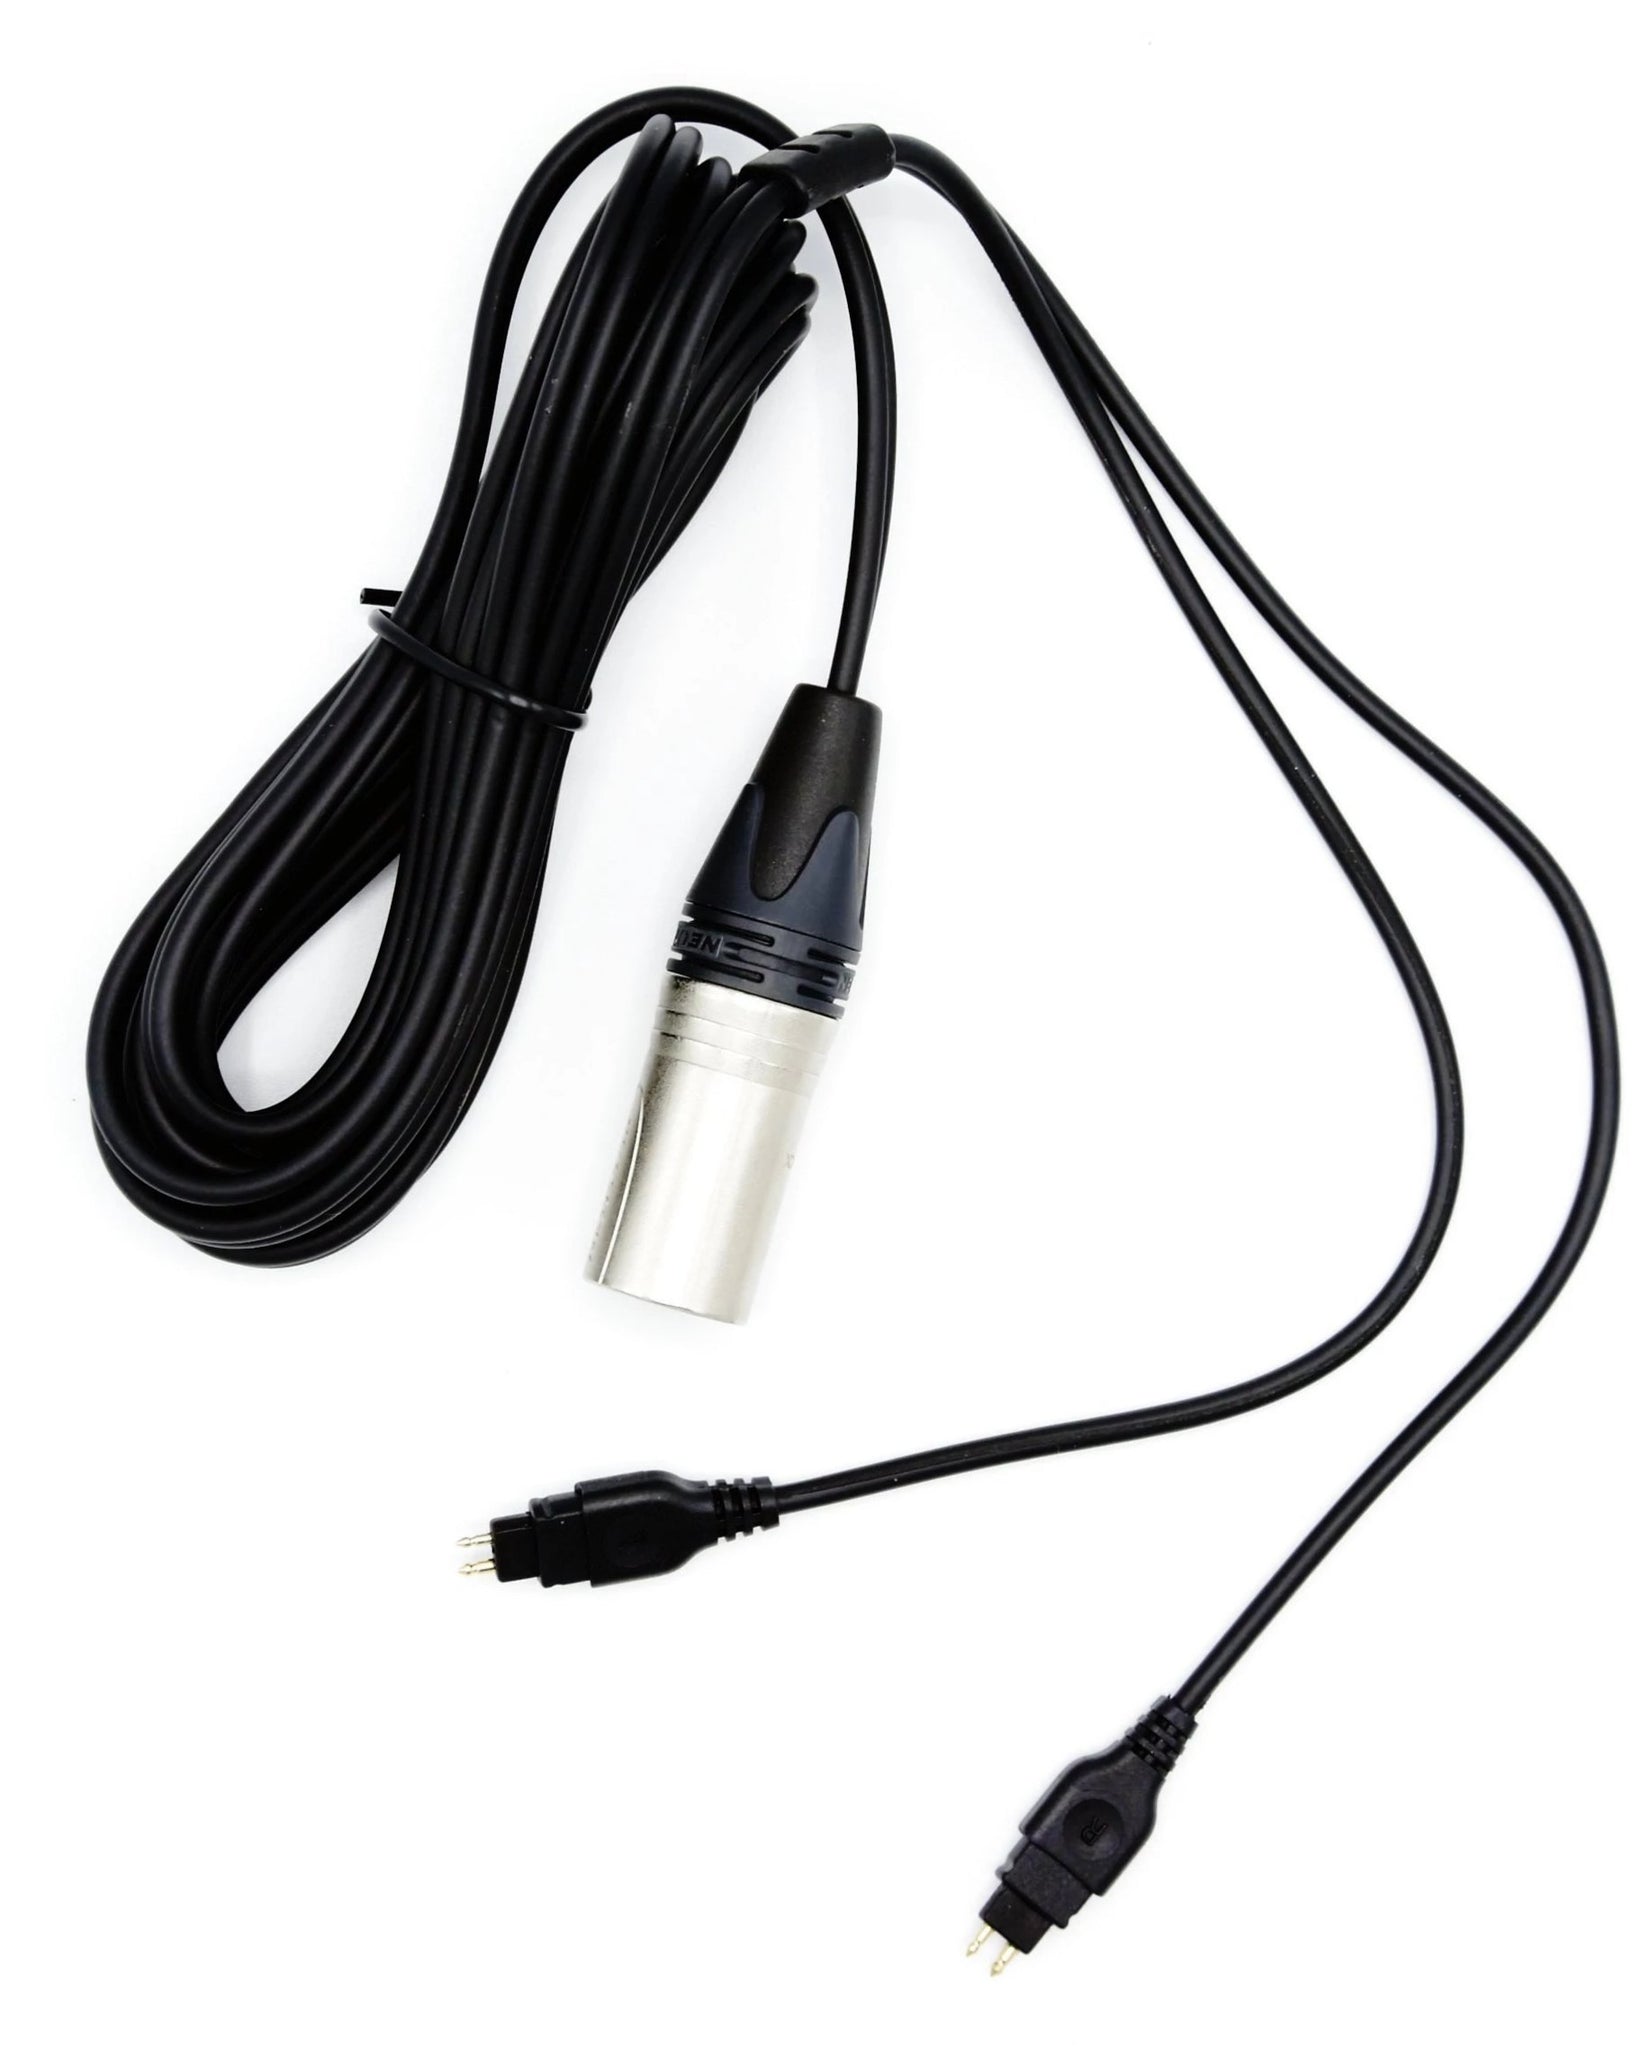 Custom Dual Sennheiser 2-pin Cable for HD600, HD6XX, 58x and more